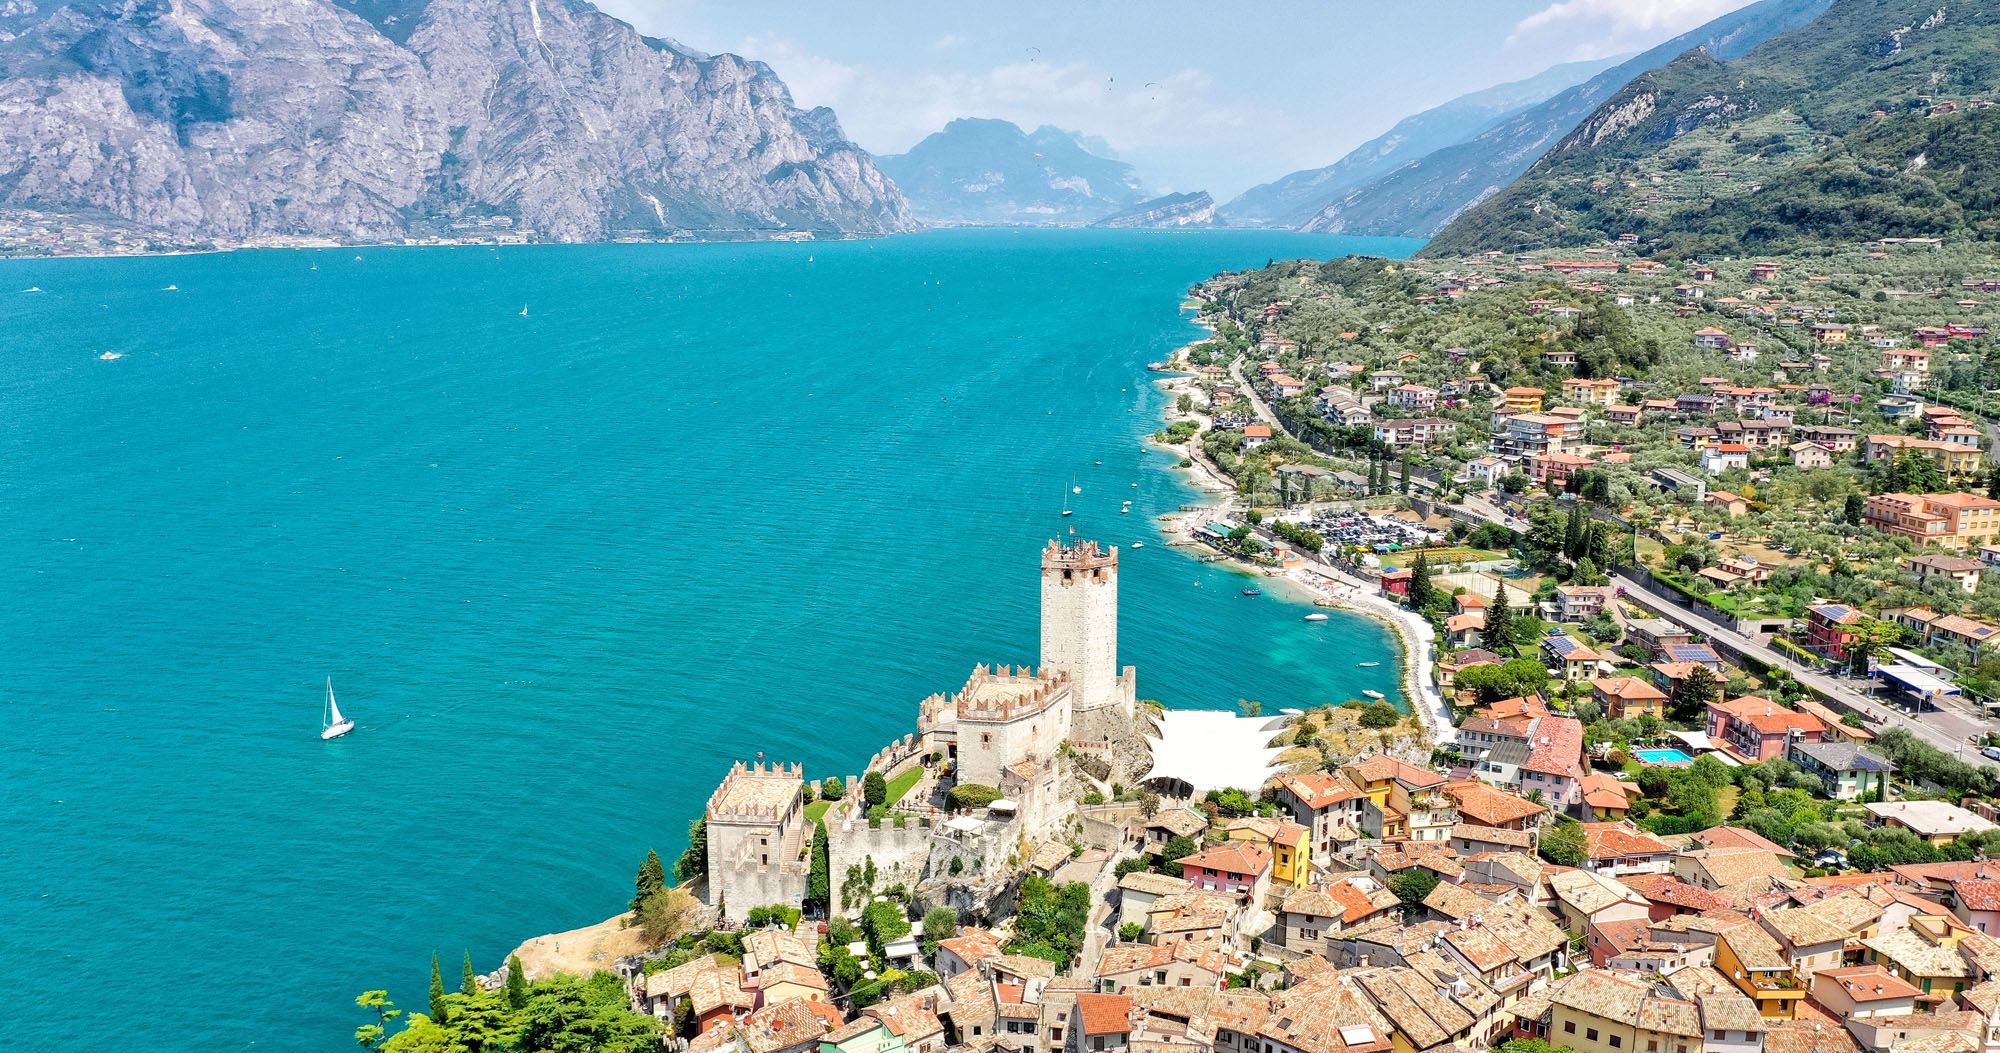 Featured image for “Lake Garda Bucket List: 25 Things to Do in Lake Garda, Italy”